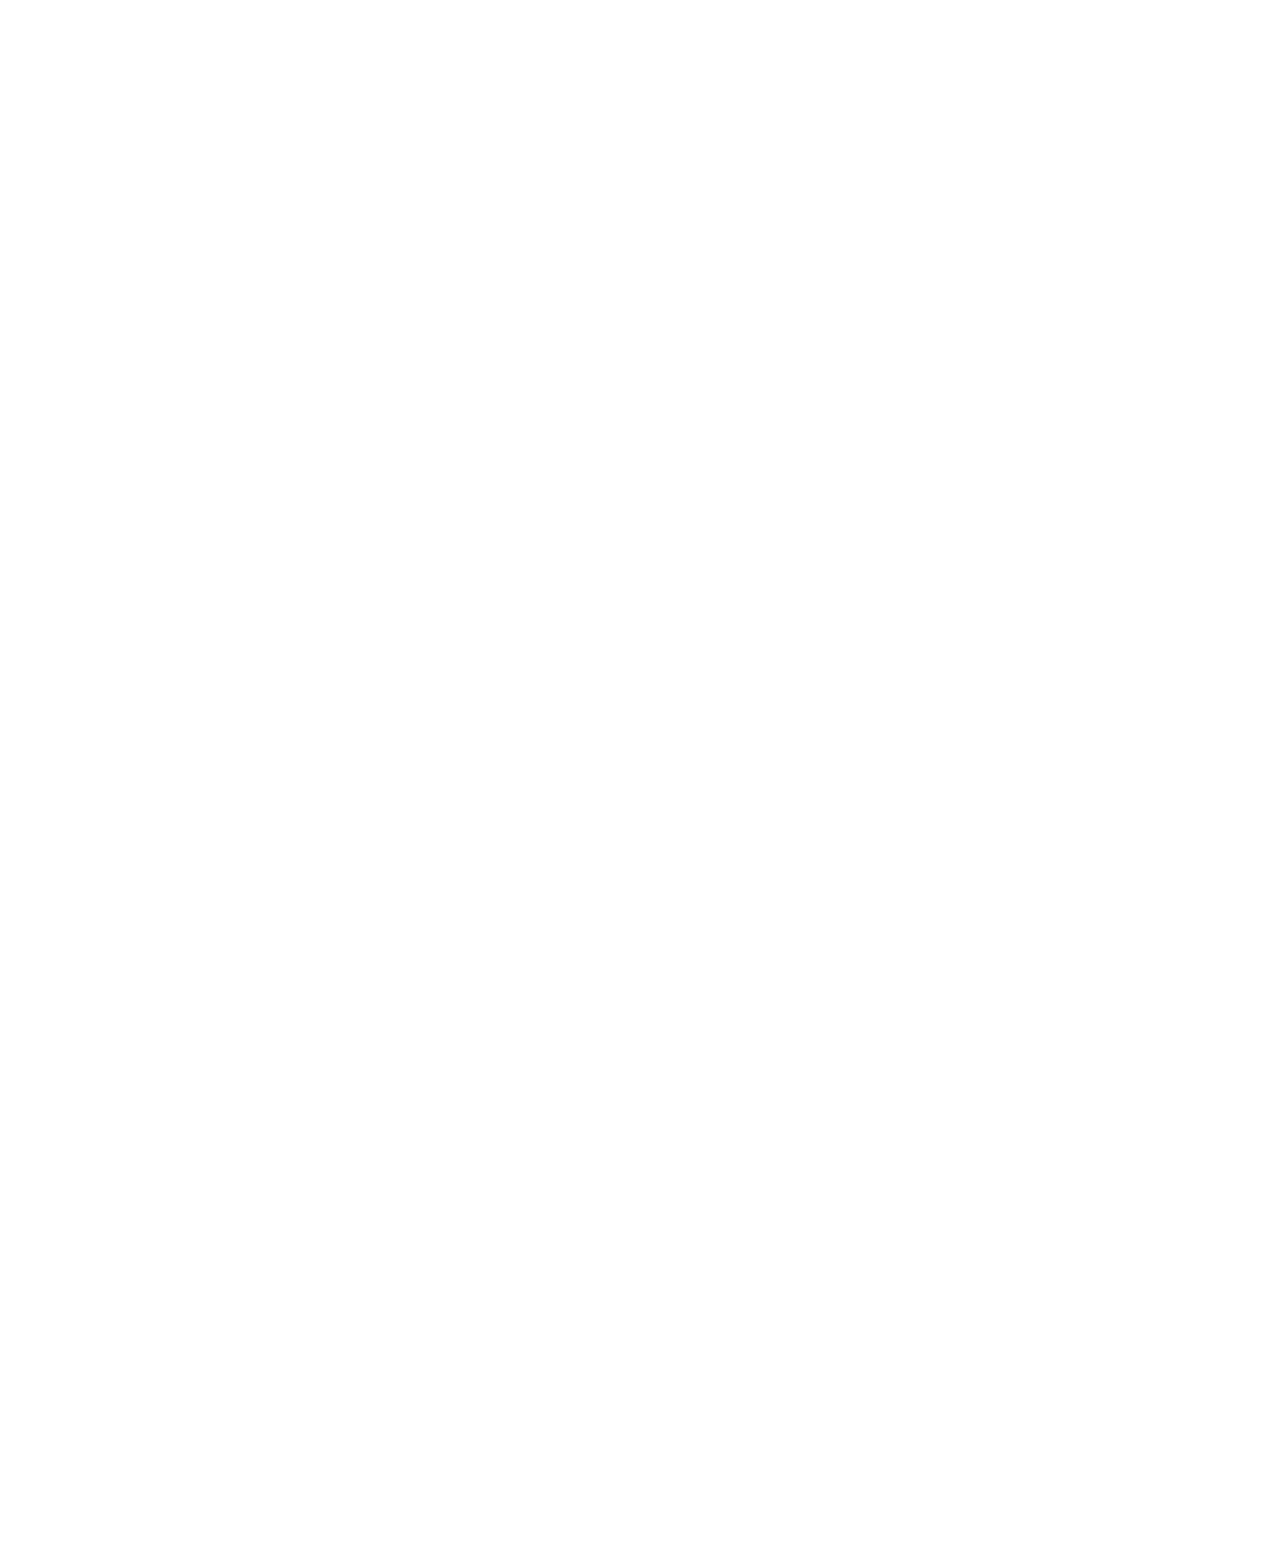 Unipar Carbocloro logo for dark backgrounds (transparent PNG)